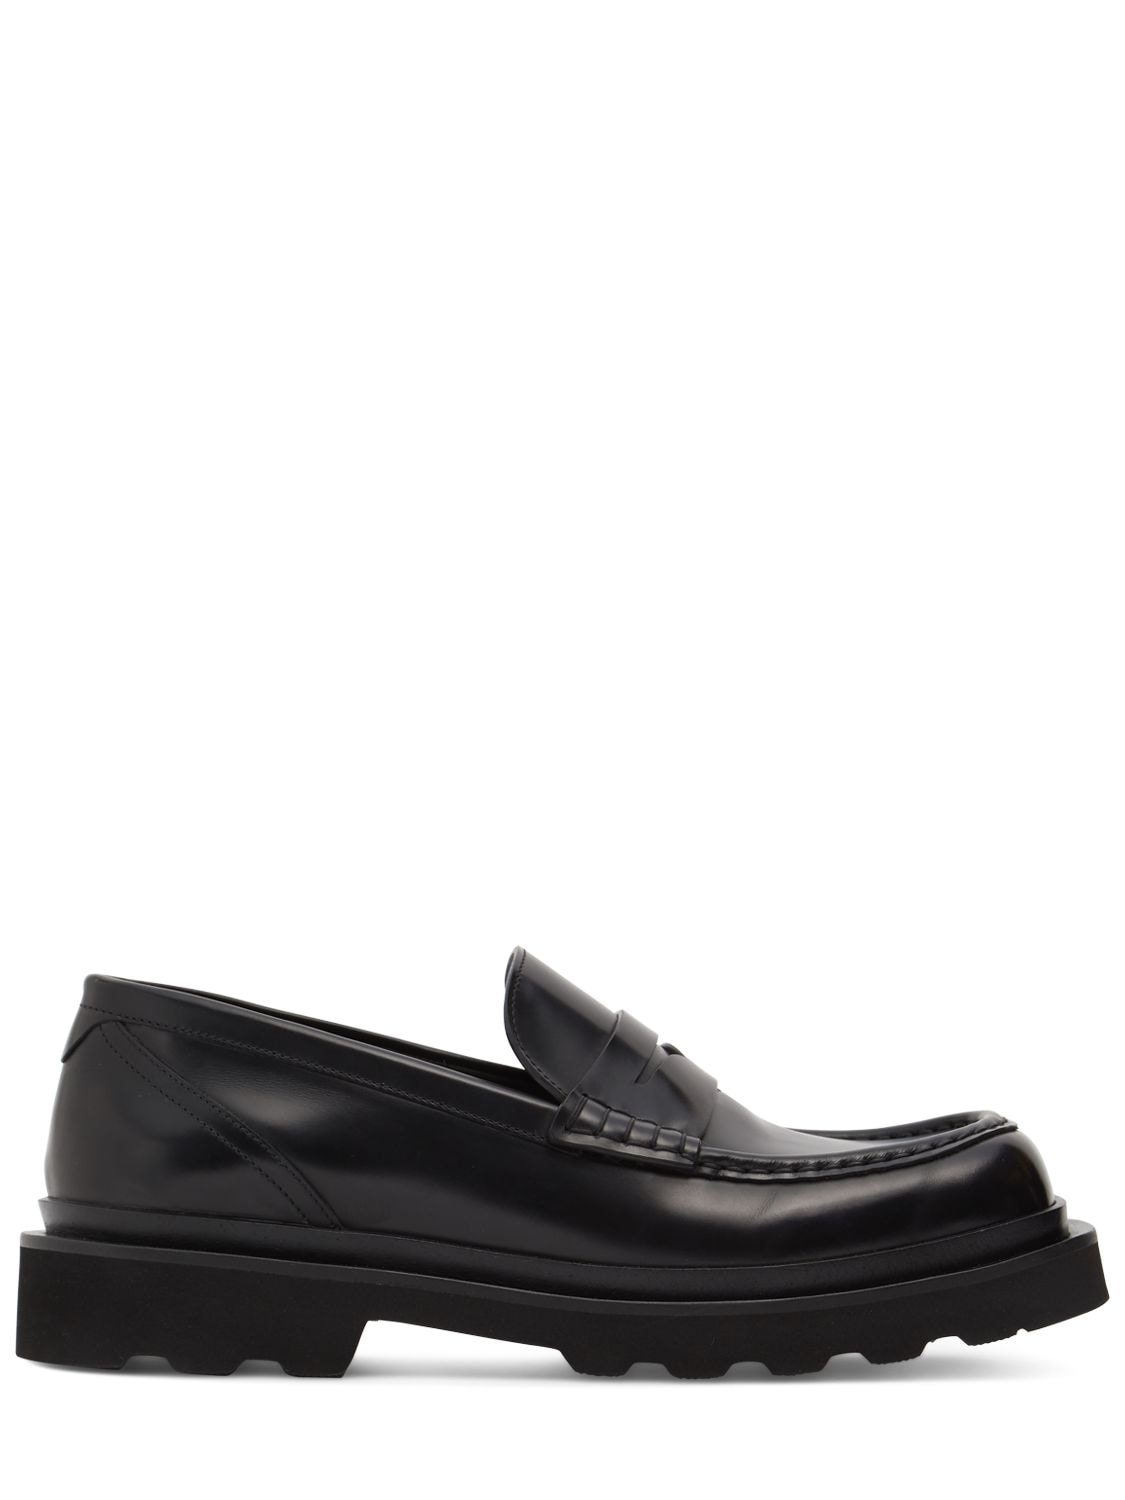 Dolce & Gabbana City Trek Squared Brushed Leather Loafer In Black